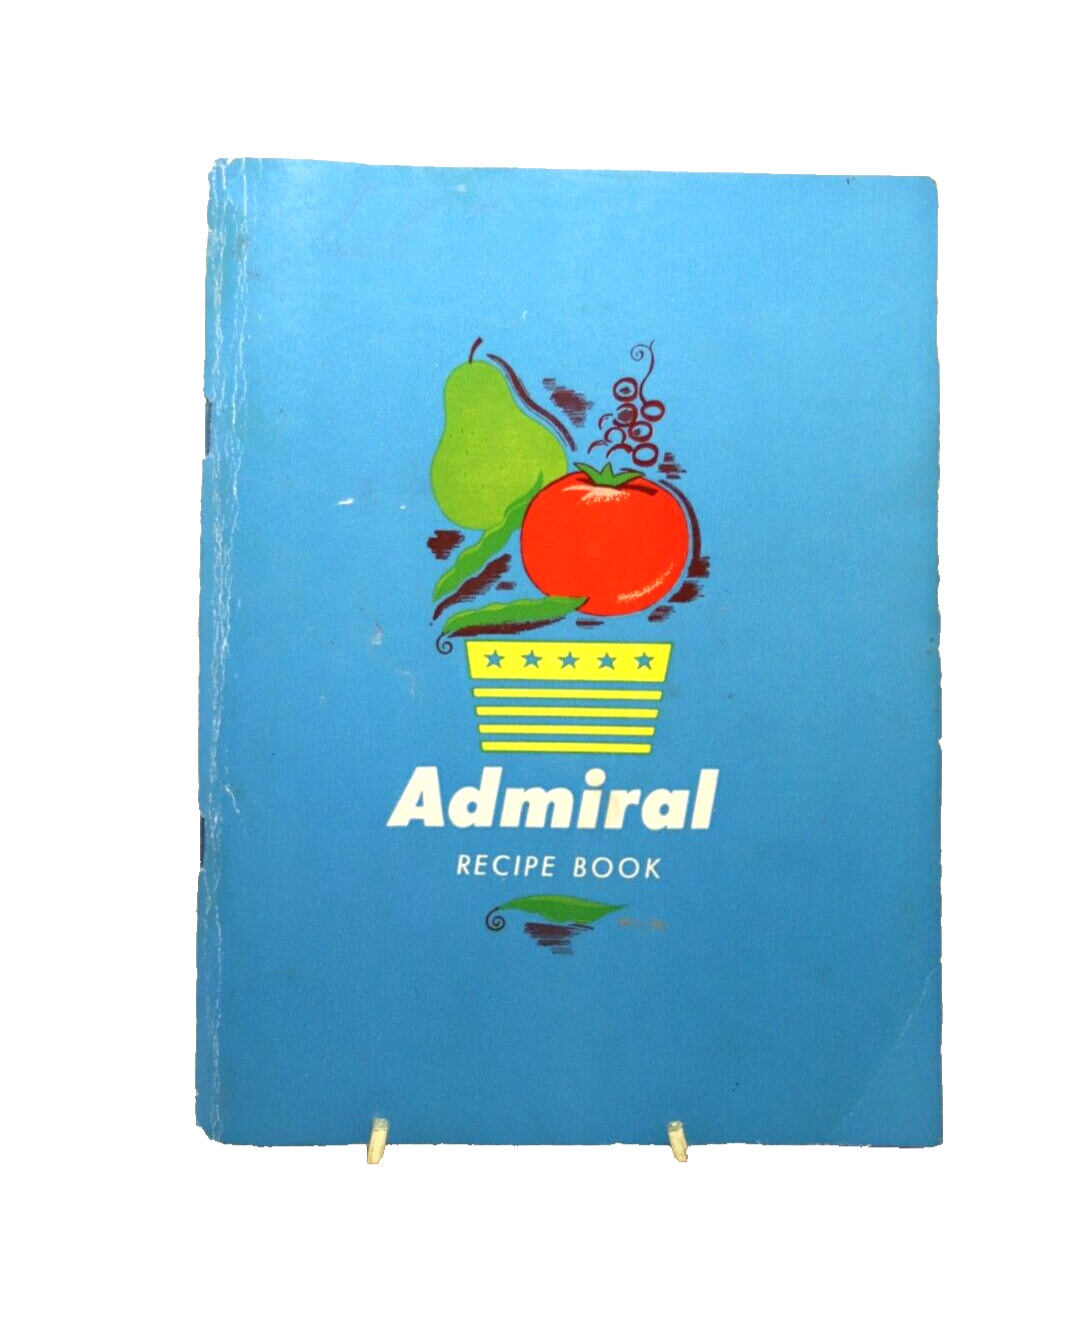 VTG Admiral Appliance Recipe Book Mid Century 1950s